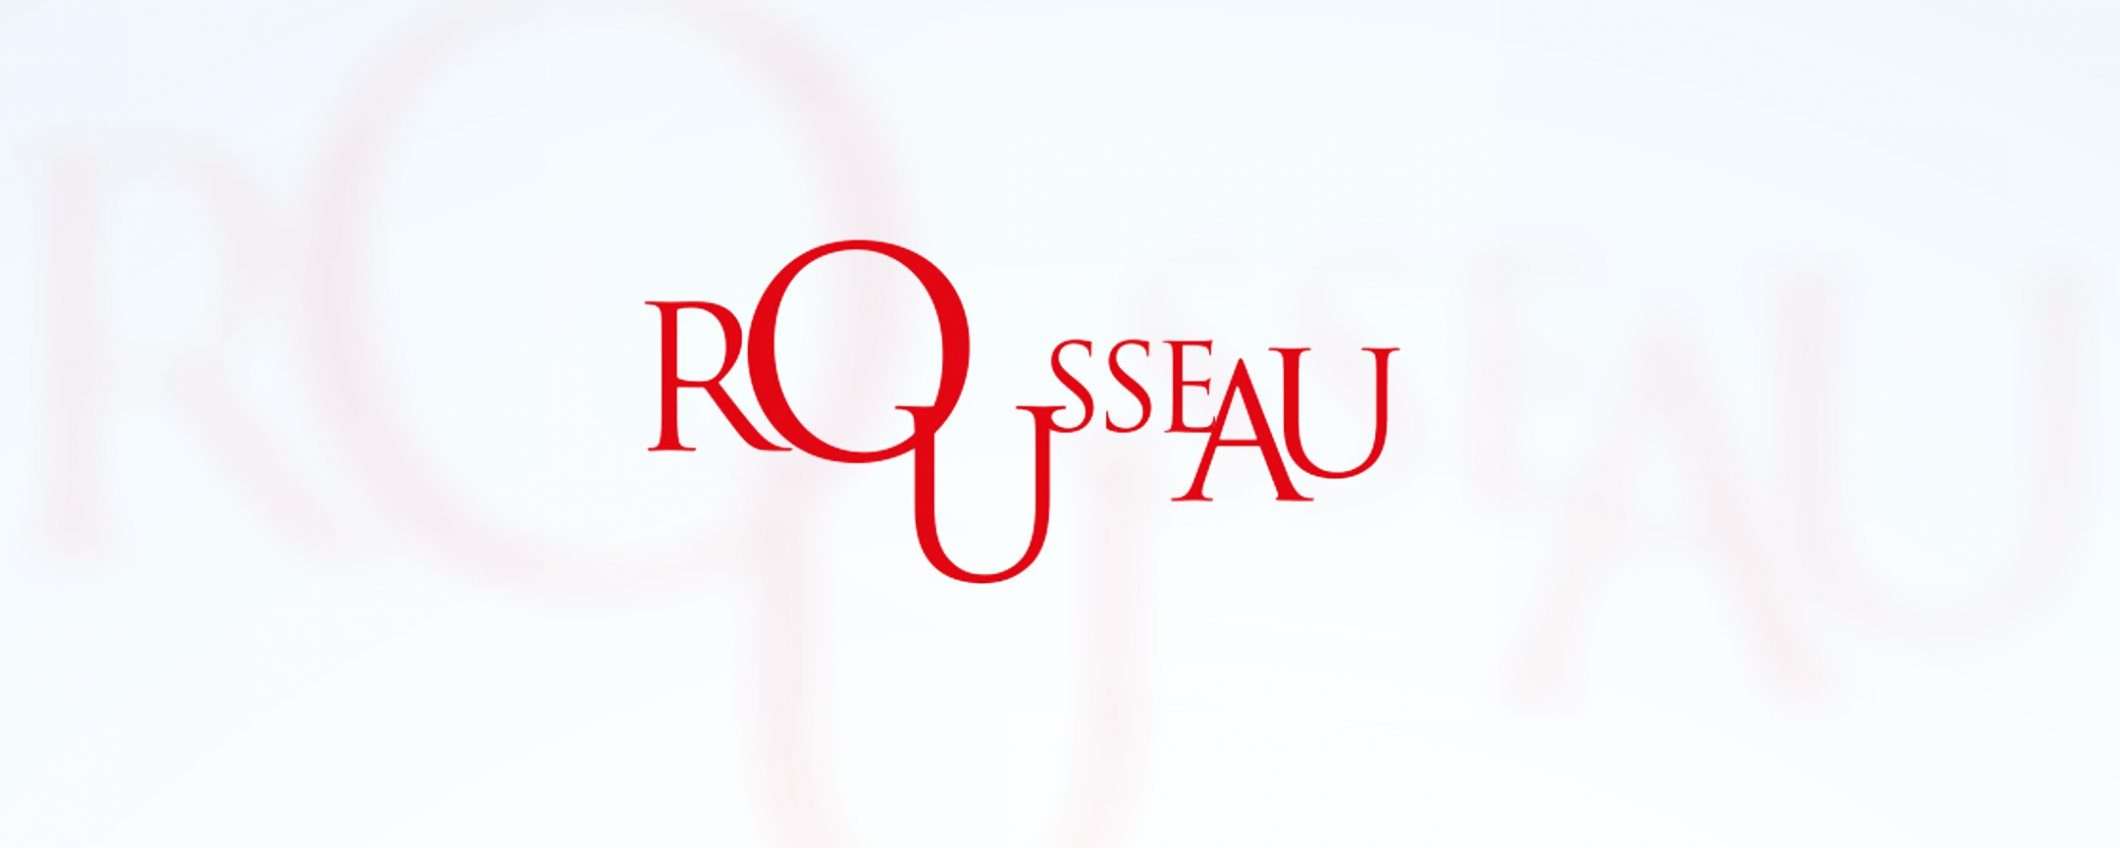 Garante Privacy: Rousseau consegni i dati al M5S